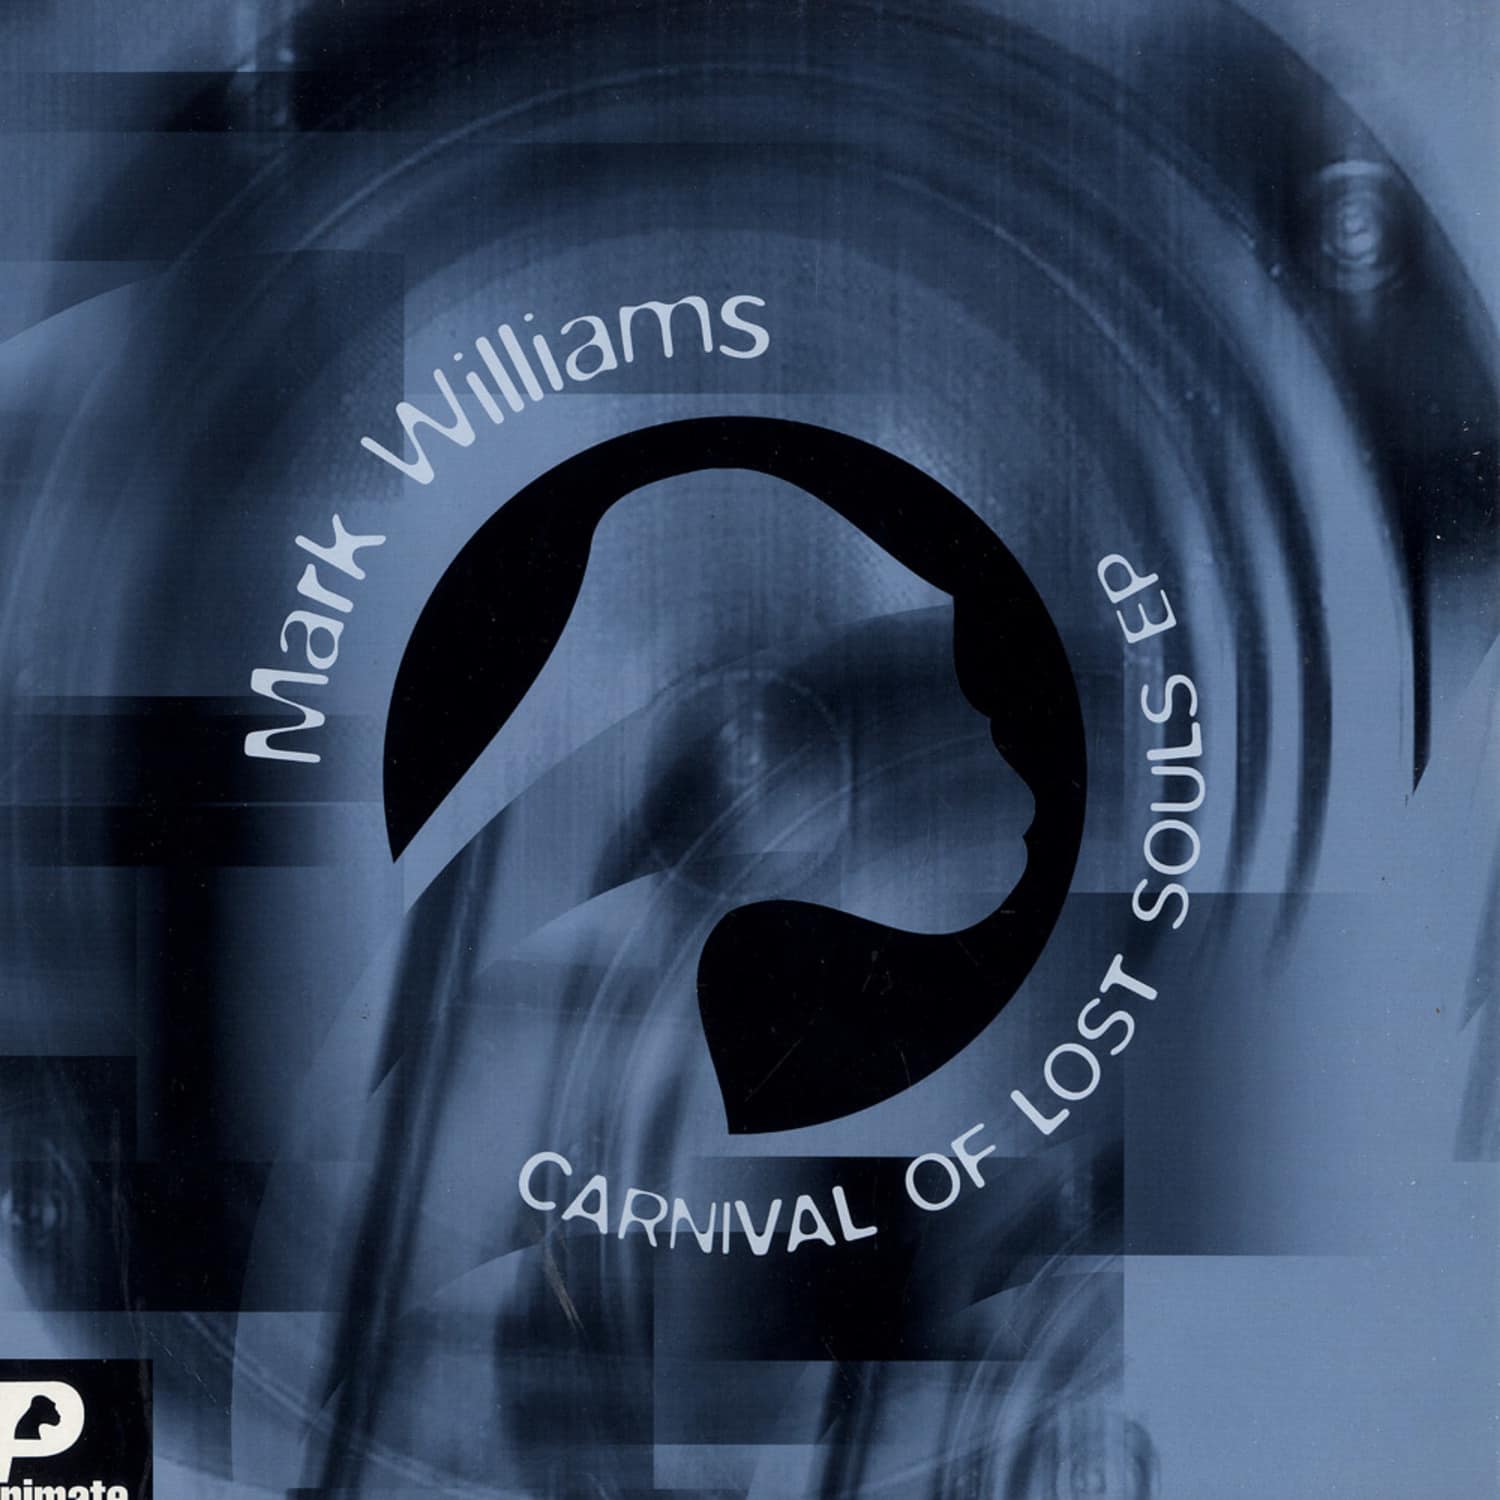 Mark Williams - CARNIVAL OF LOST SOULS